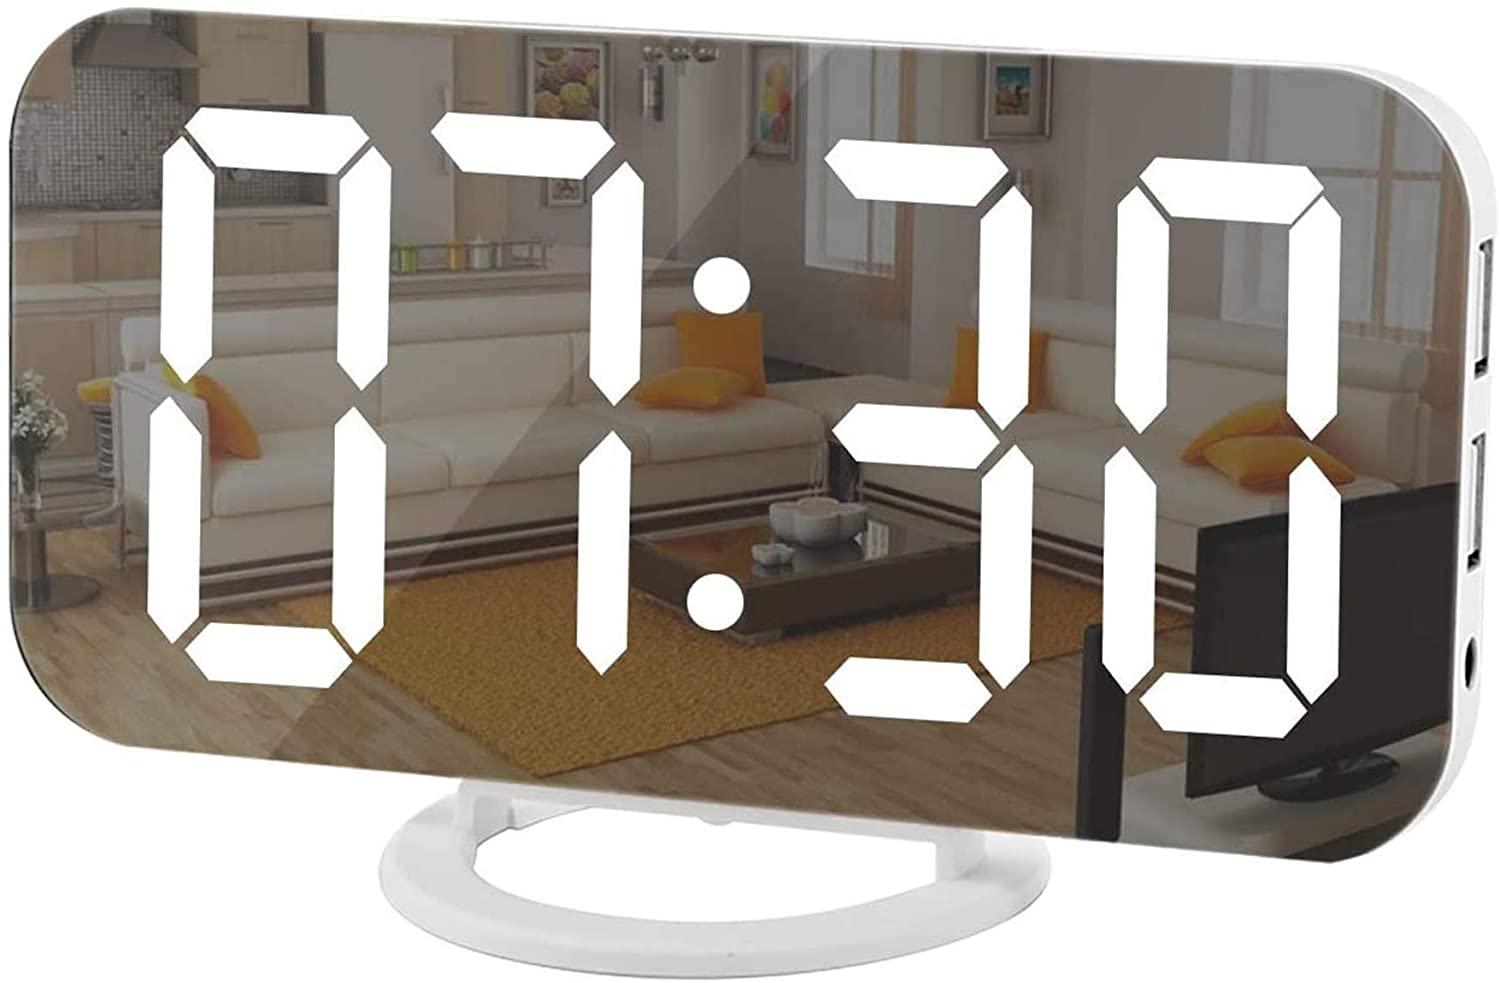 Digital Clock Large Display, LED Electric Alarm Clocks Mirror Surface for Makeup with Diming Mode - Lasercutwraps Shop